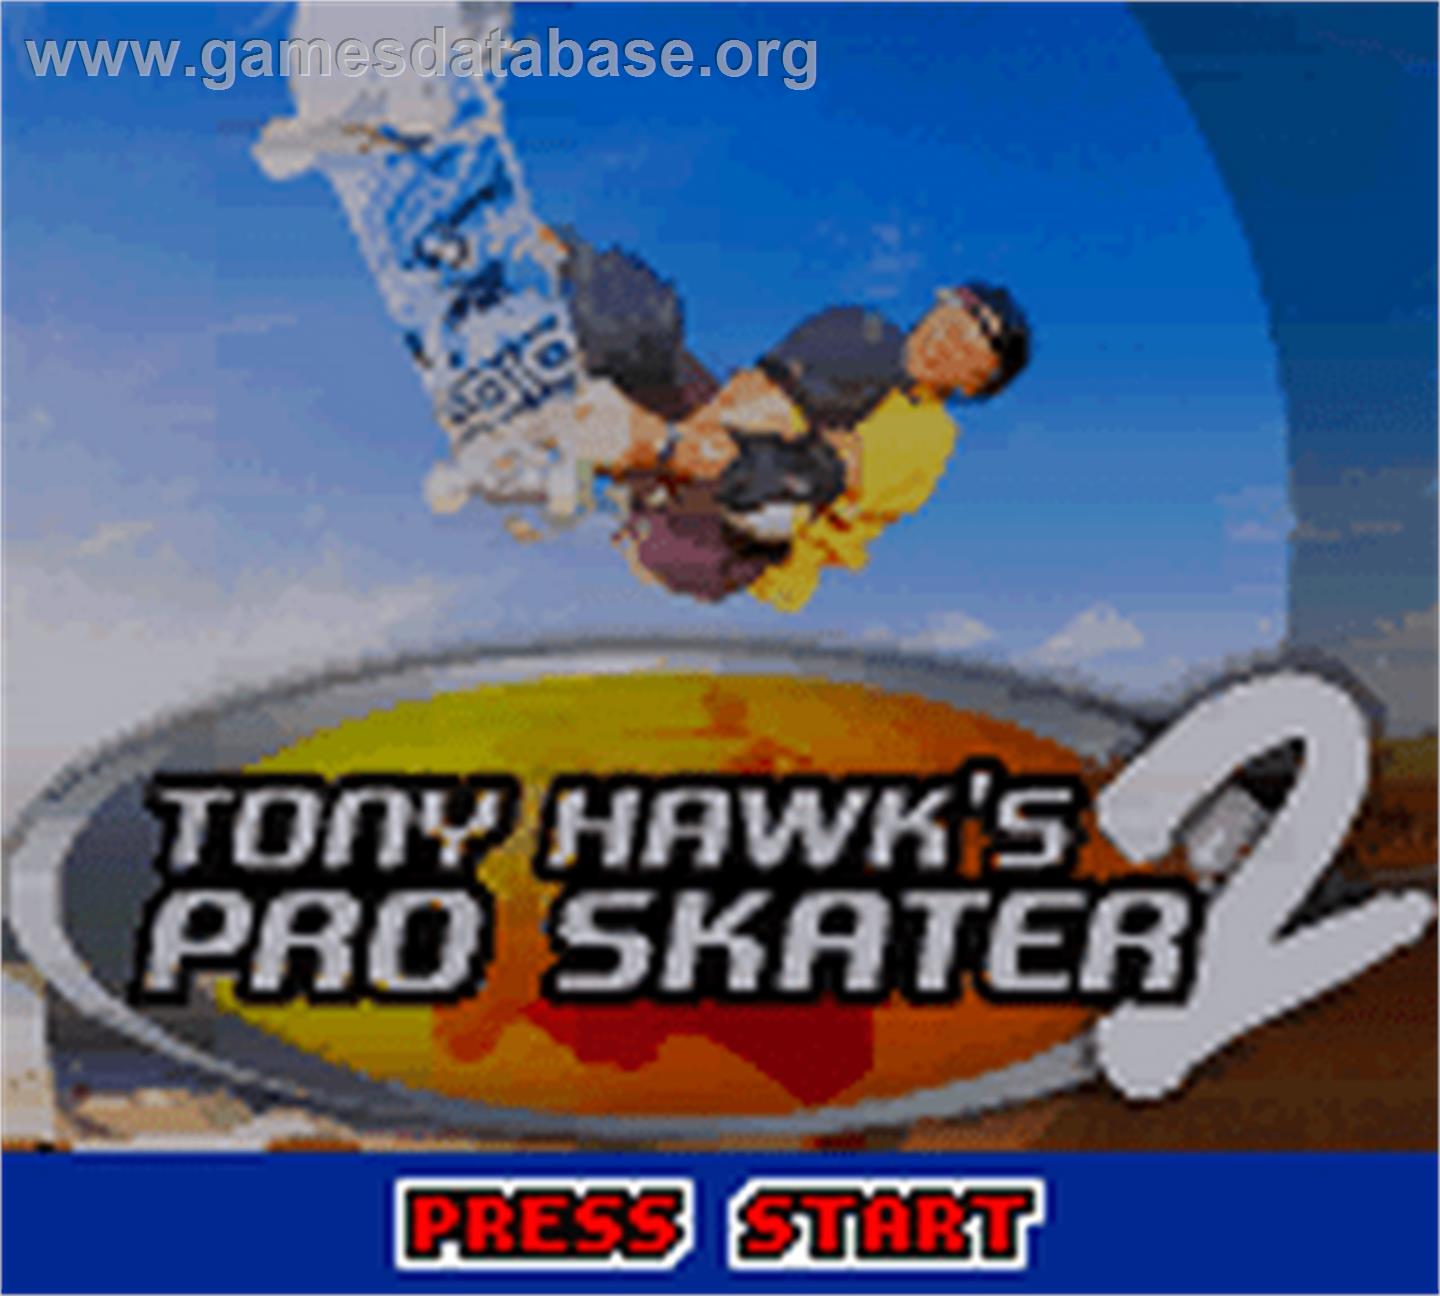 Tony Hawk's Pro Skater 2 - Nintendo Game Boy Color - Artwork - Title Screen